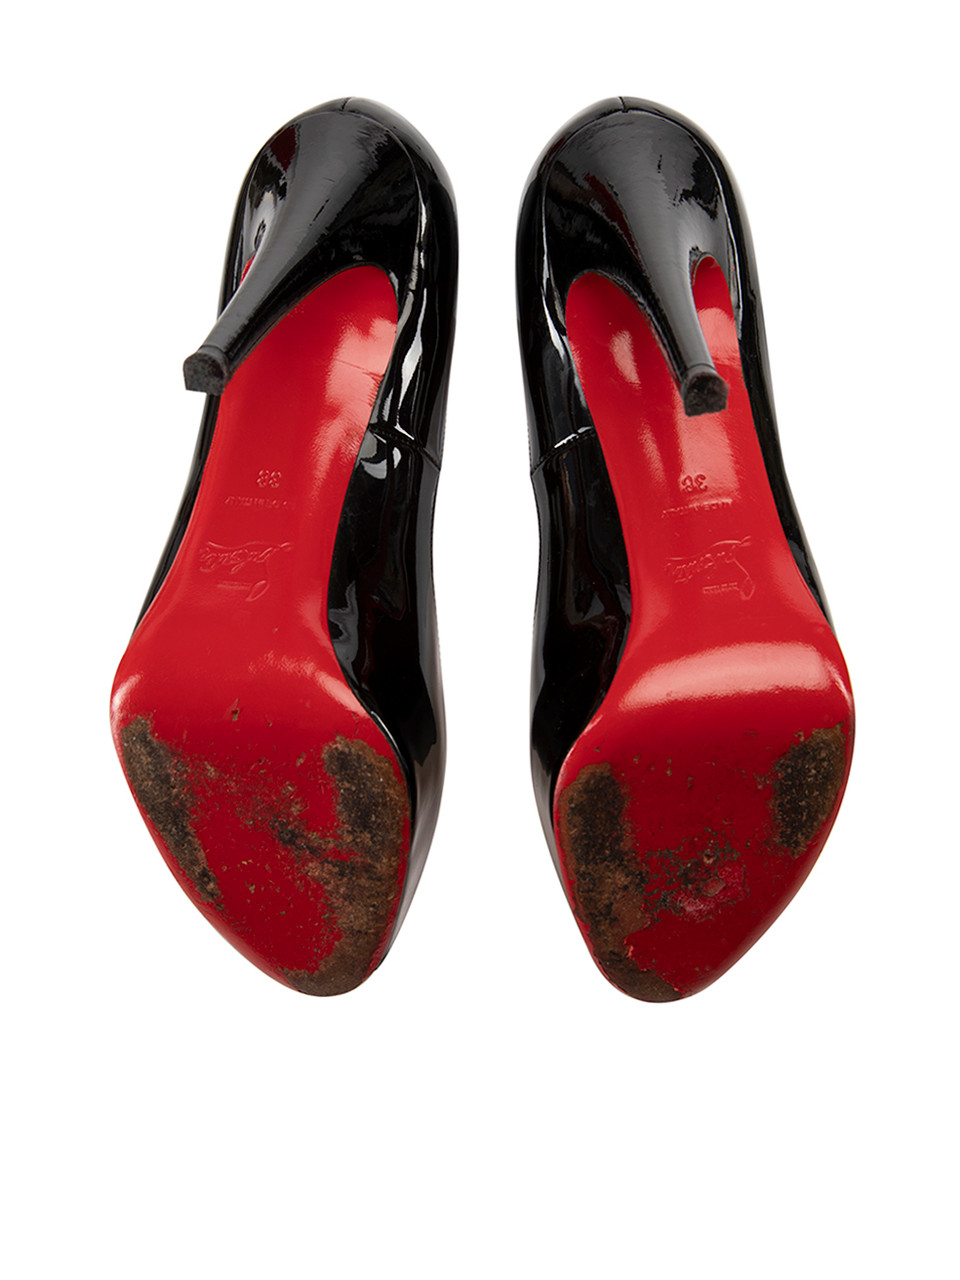 Christian Louboutin Black Patent Leather Very Prive 120 Platform Peep Toe Heels